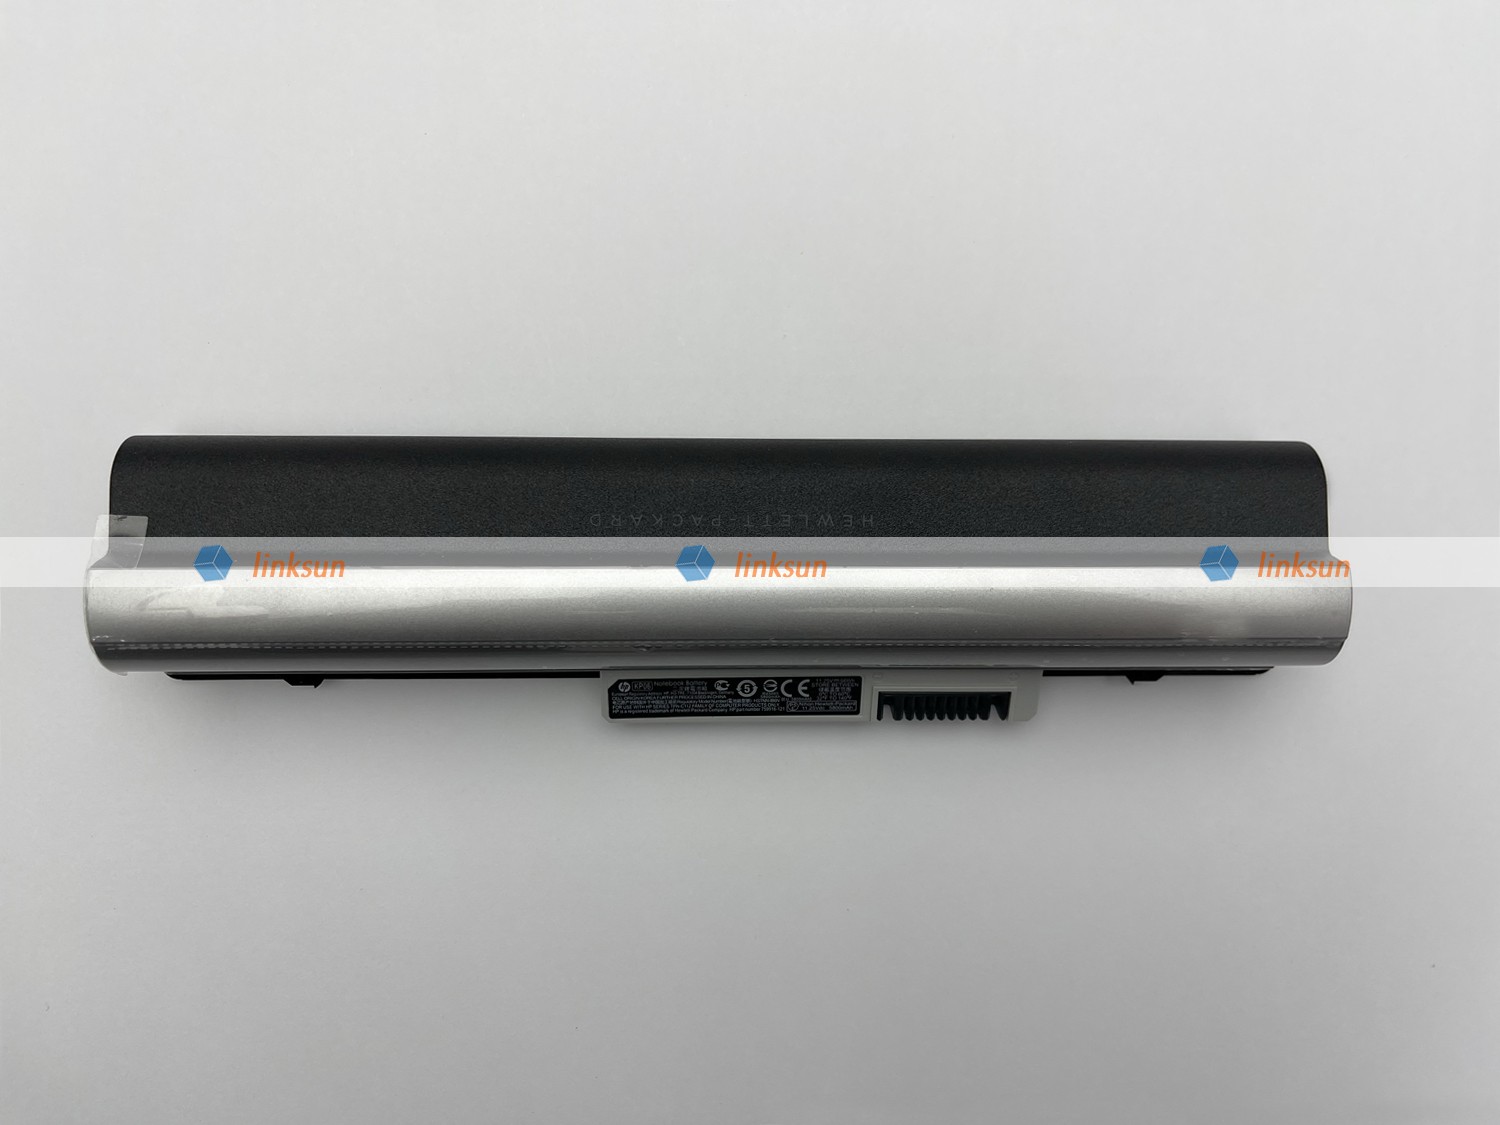 KP03 laptop battery front